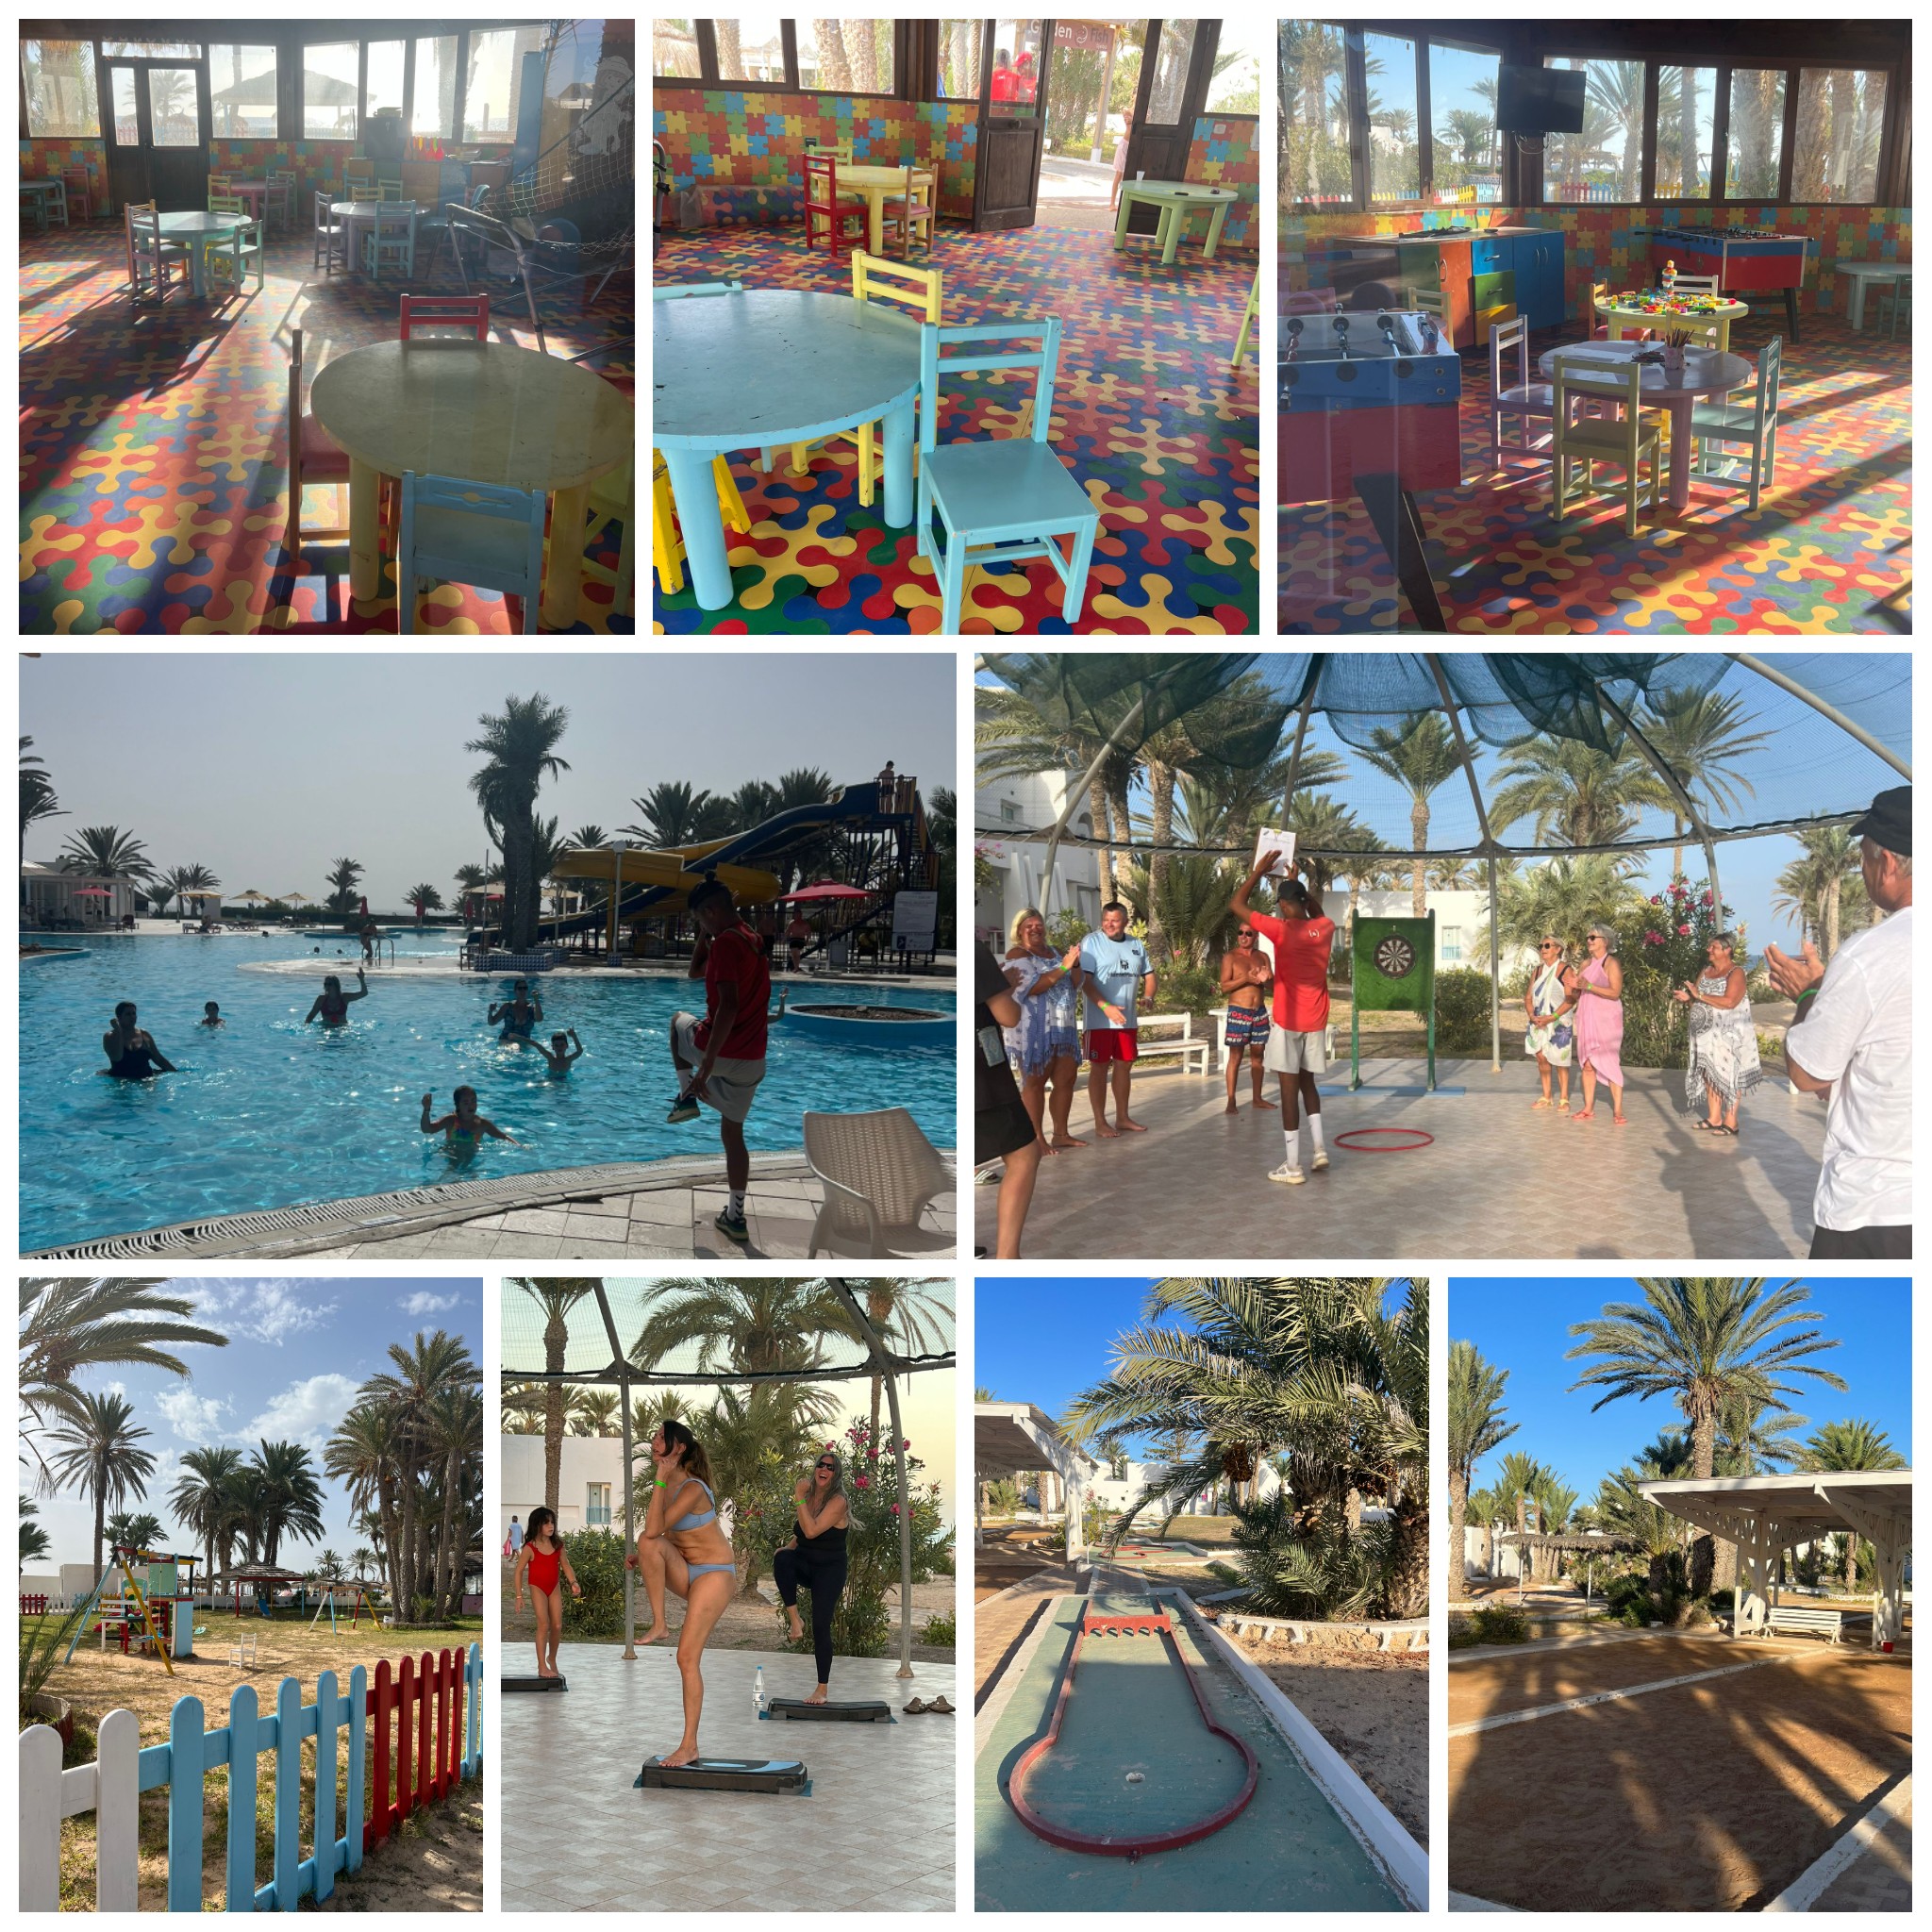 Les activités de l'hôtel de Djerba - Lidl Voyage